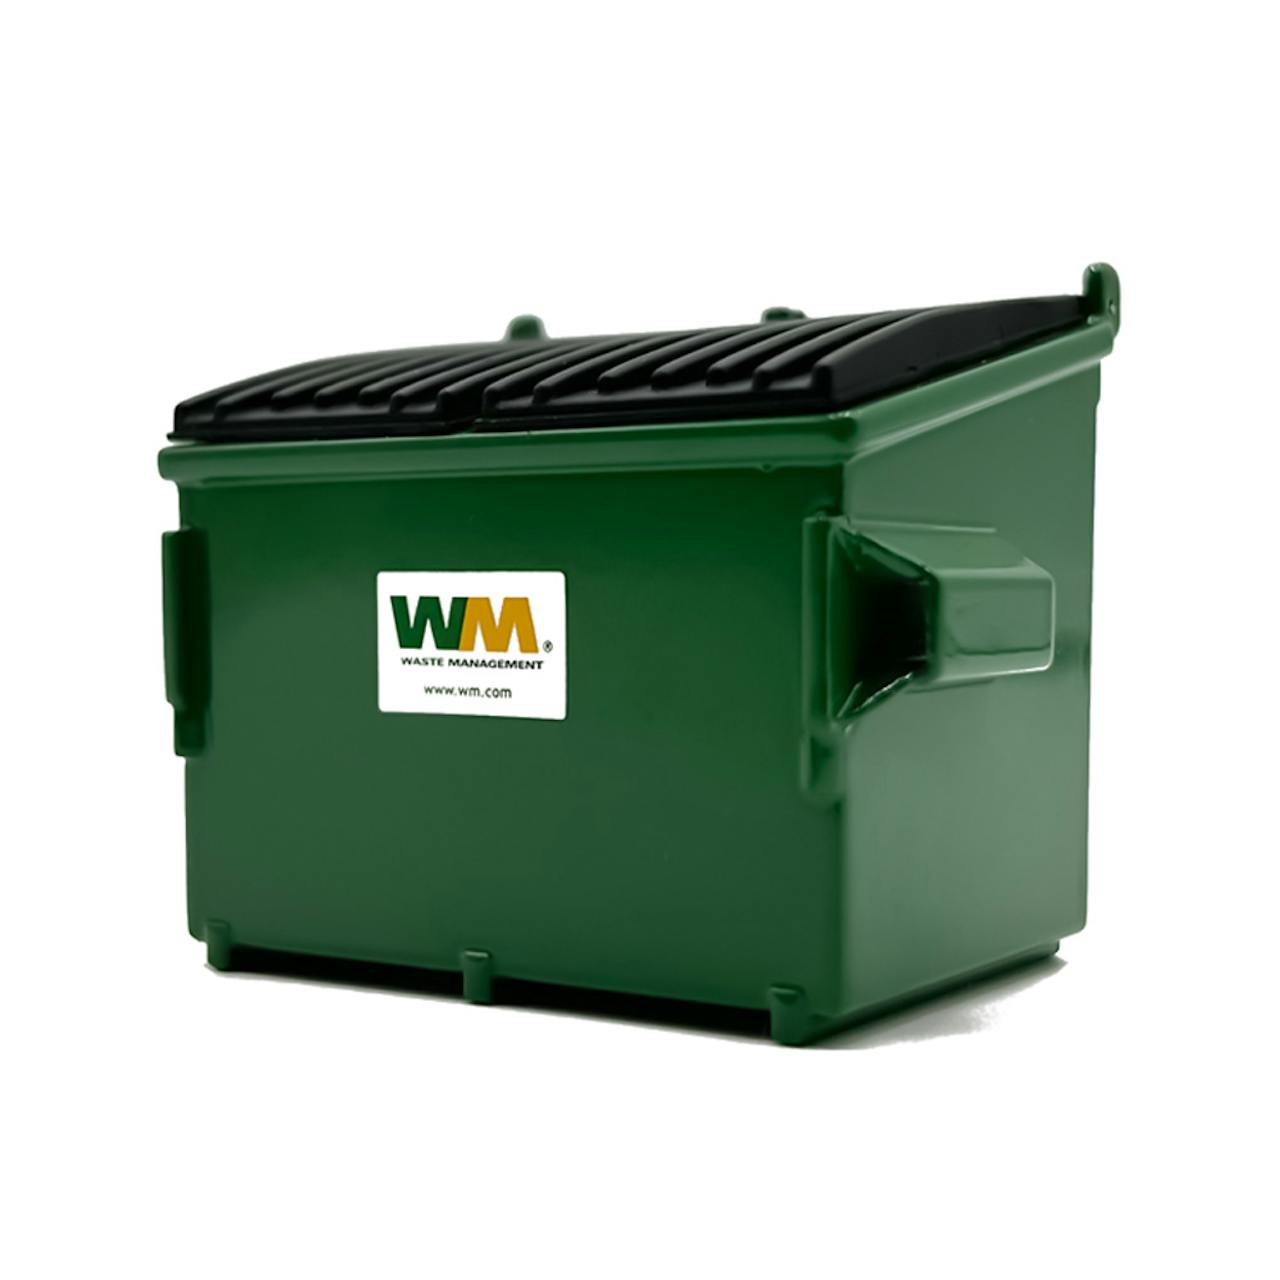 Waste Management Trash Bin Replica 1/34 Scale